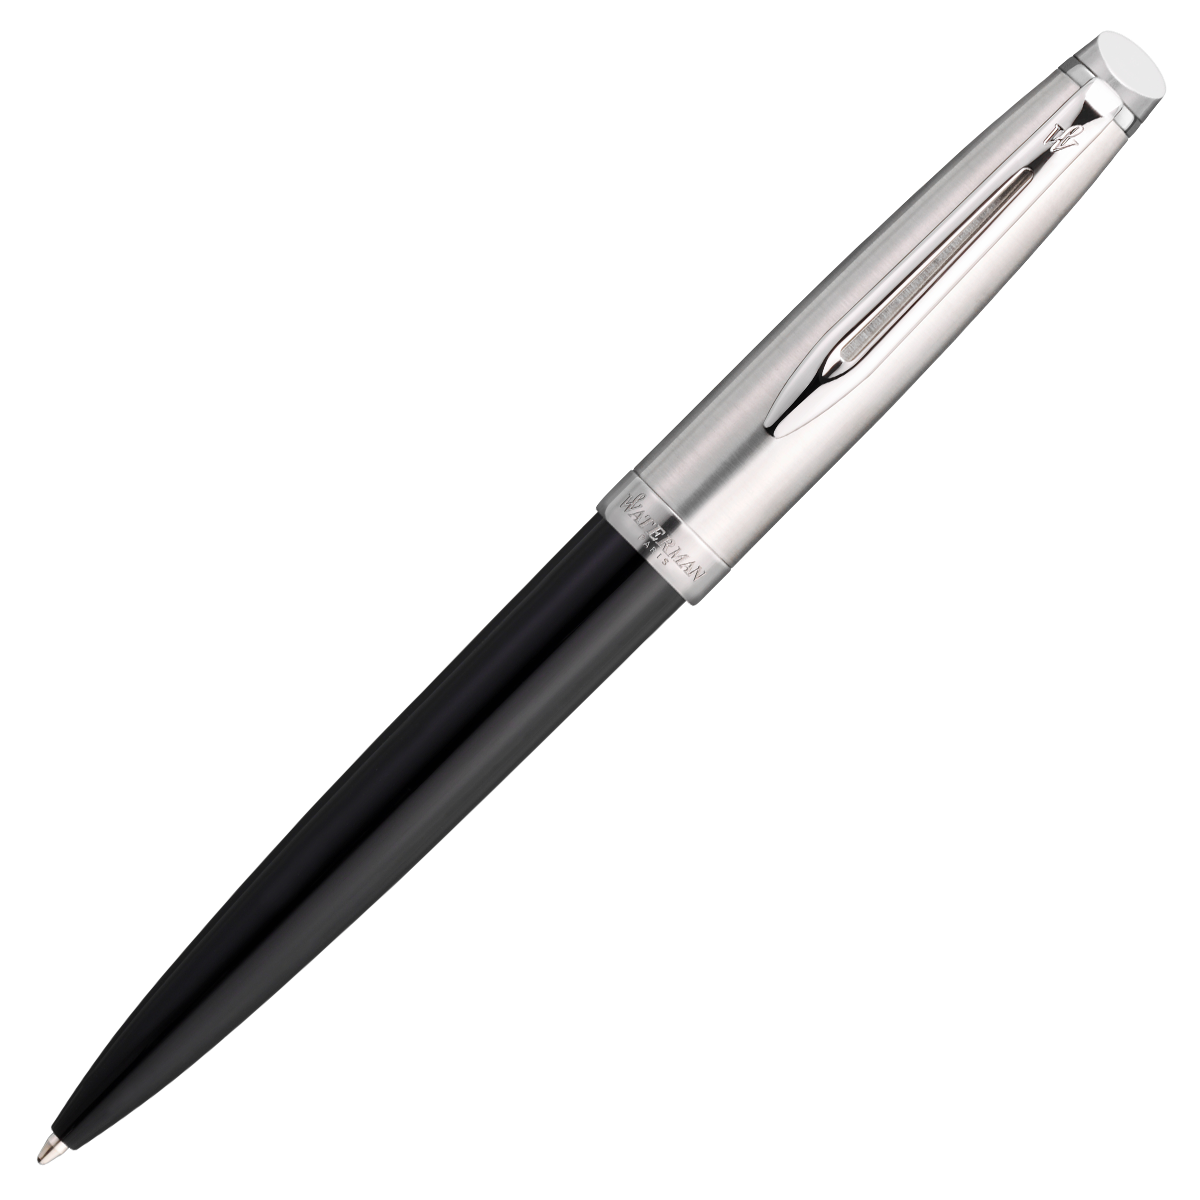 Emblème Black/Chrome Ballpoint Pen in the group Pens / Fine Writing / Ballpoint Pens at Pen Store (128047)